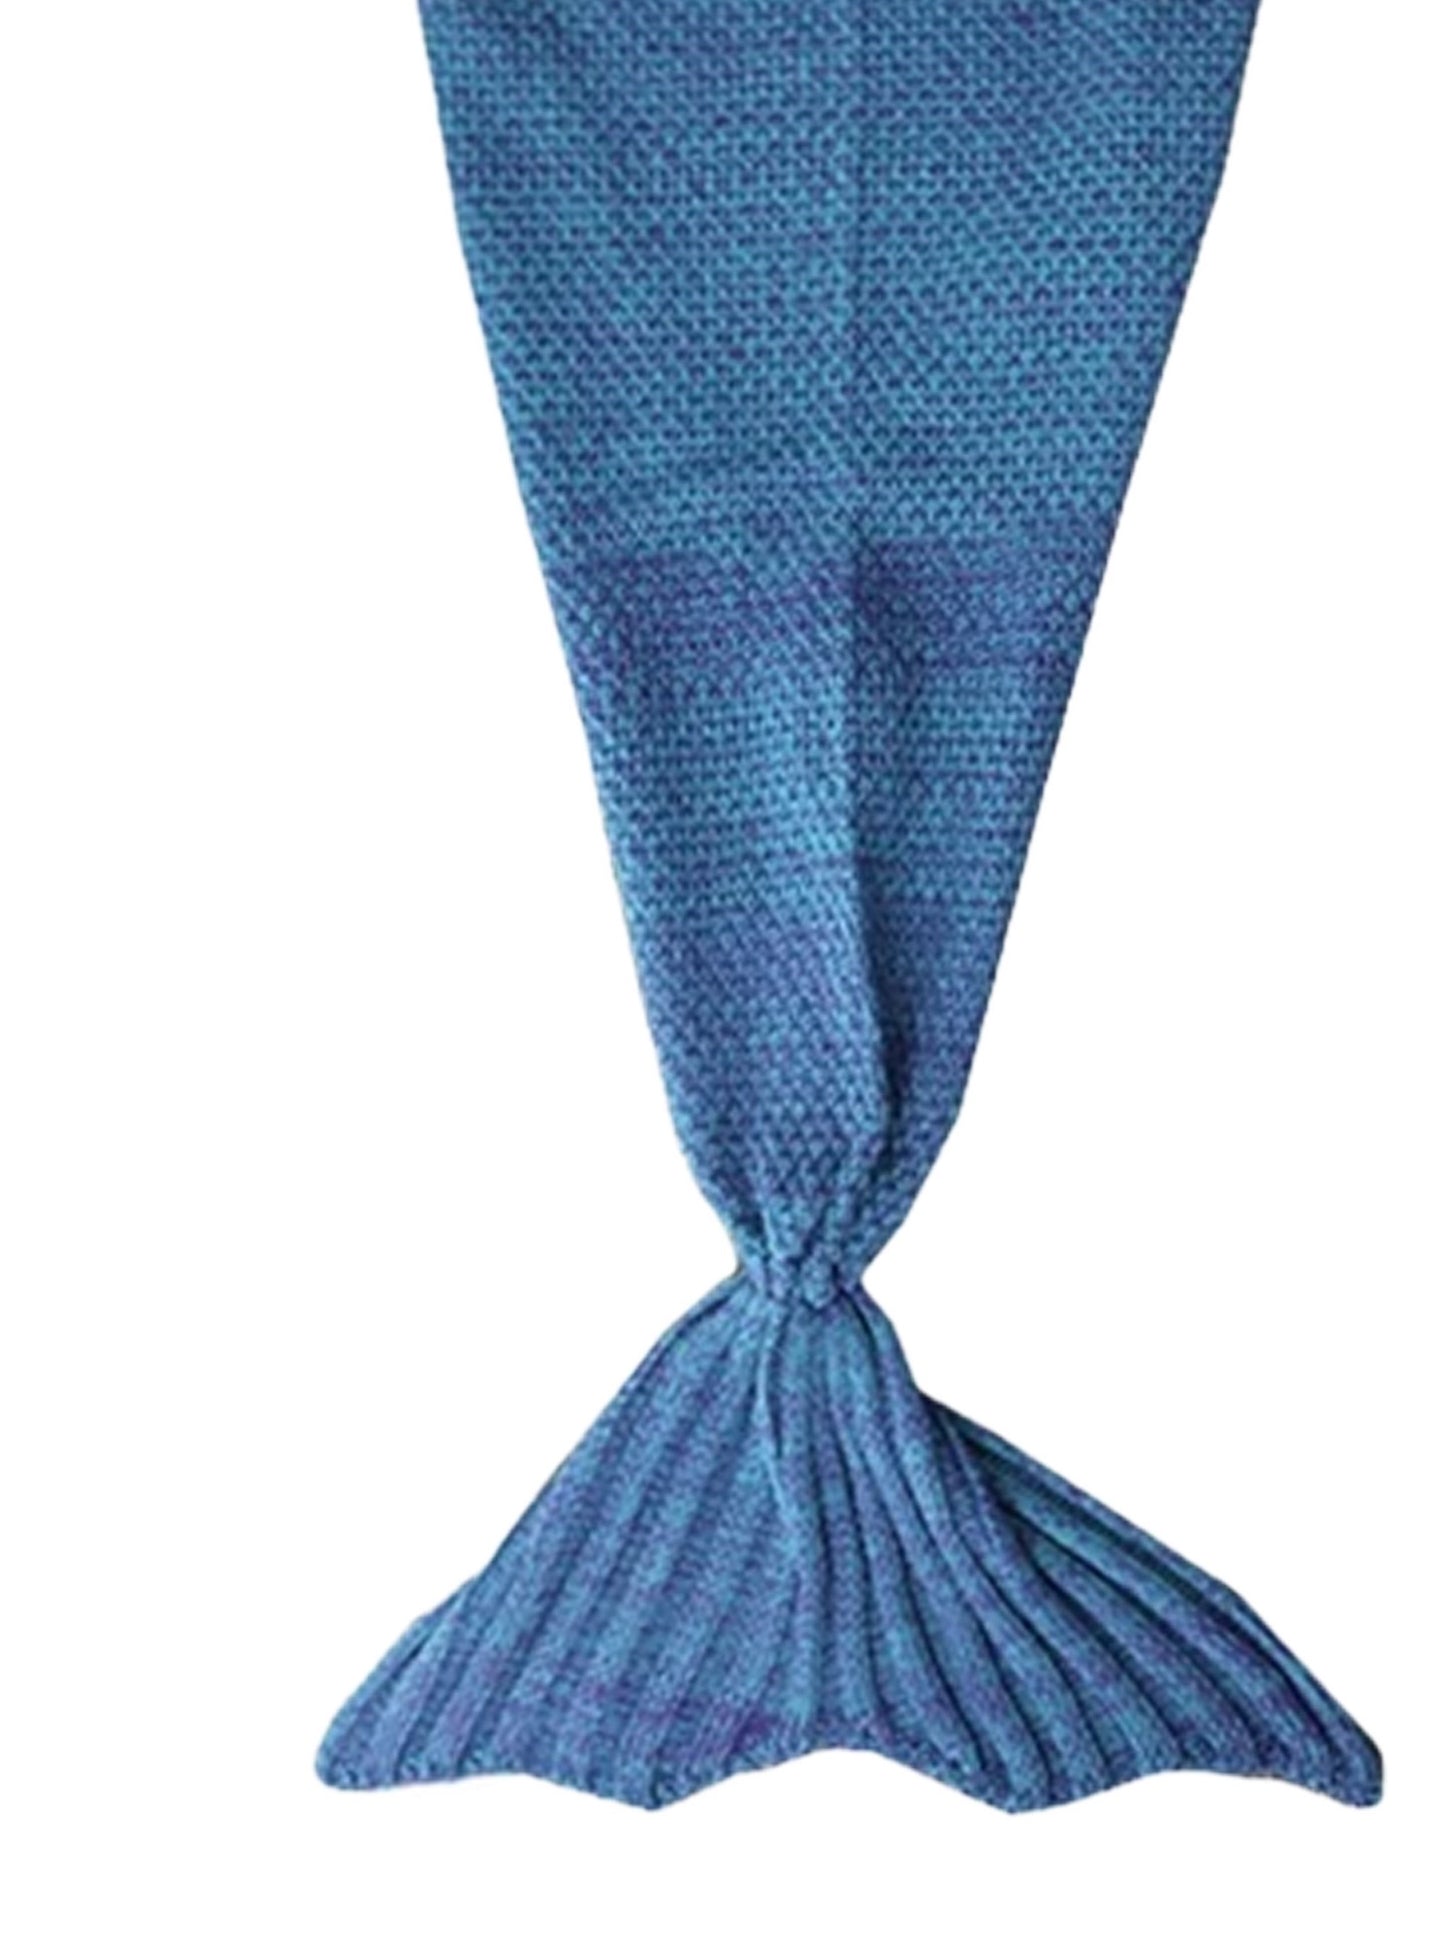 Crochet Teen/Adult Mermaid Tail Blanket Ruffle Top Blue-Purple